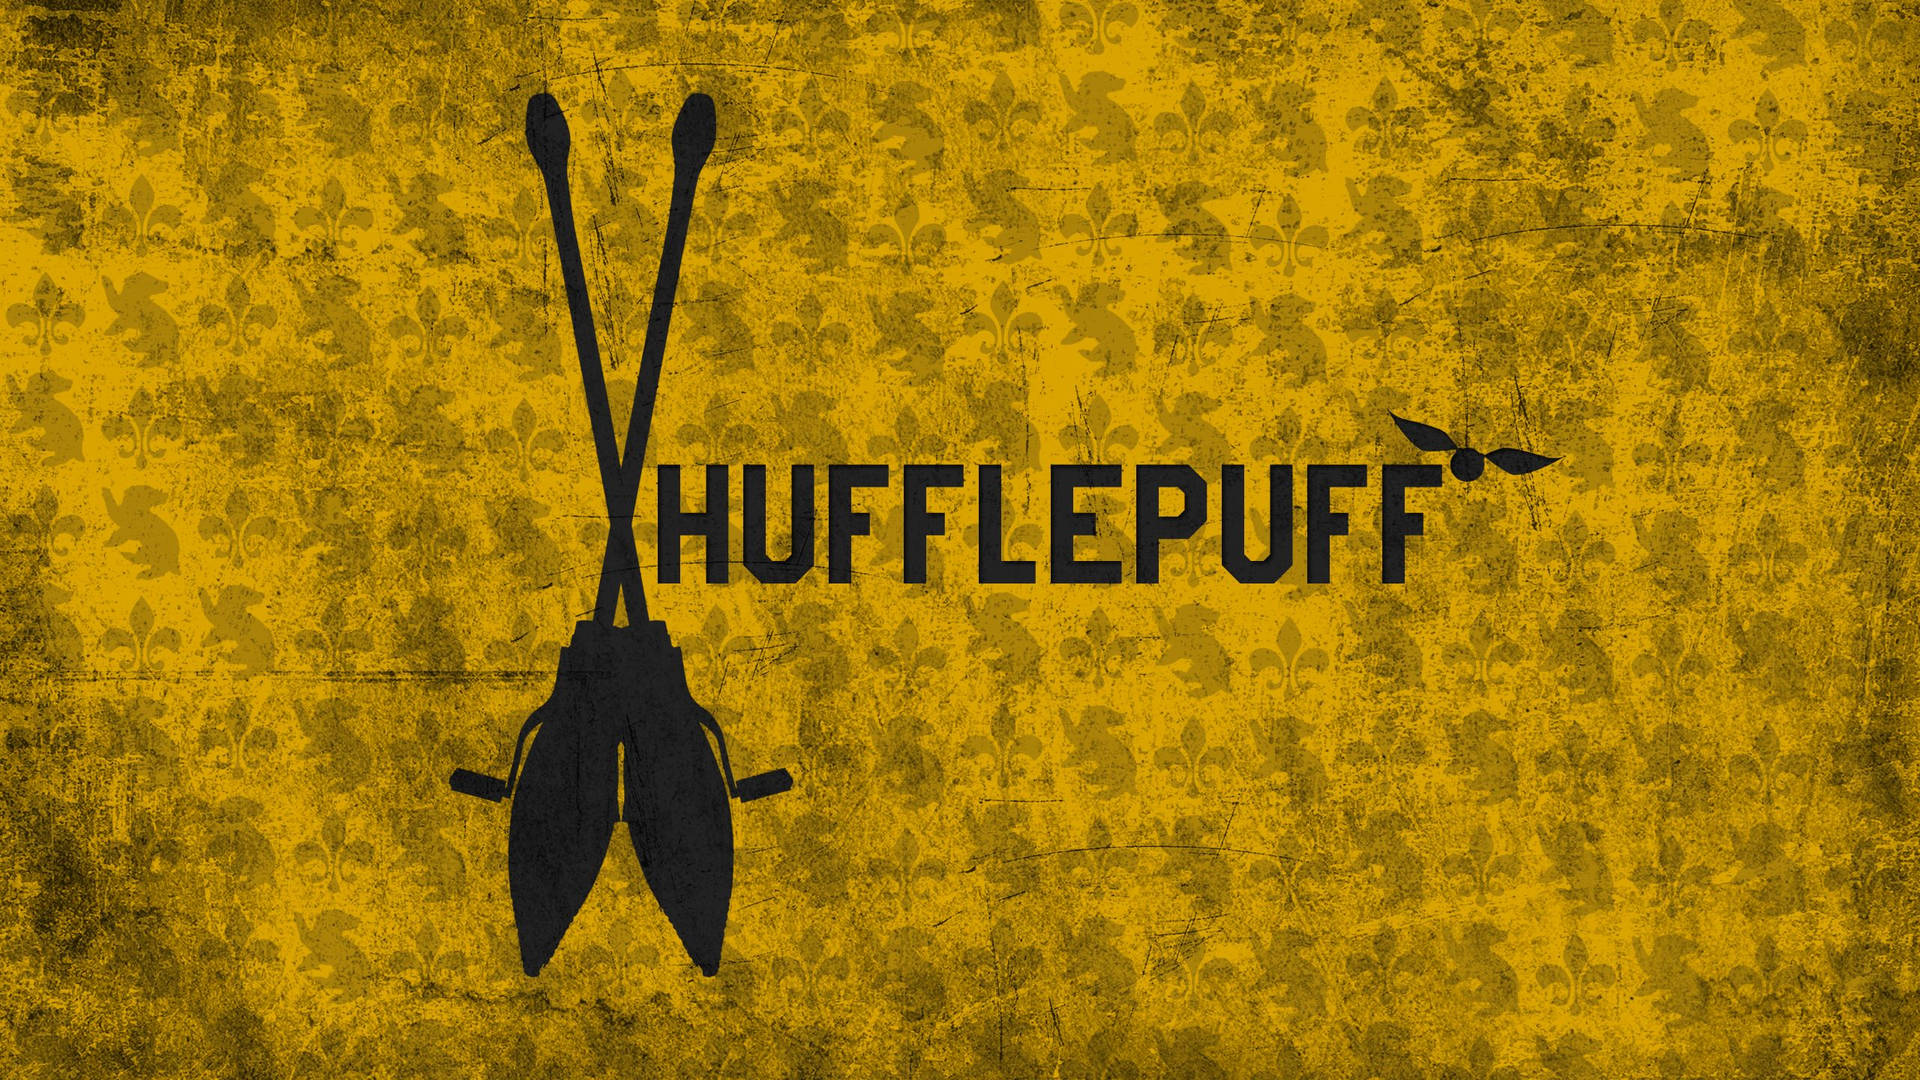 Harry Potter Houses Hufflepuff Quidditch Wallpaper